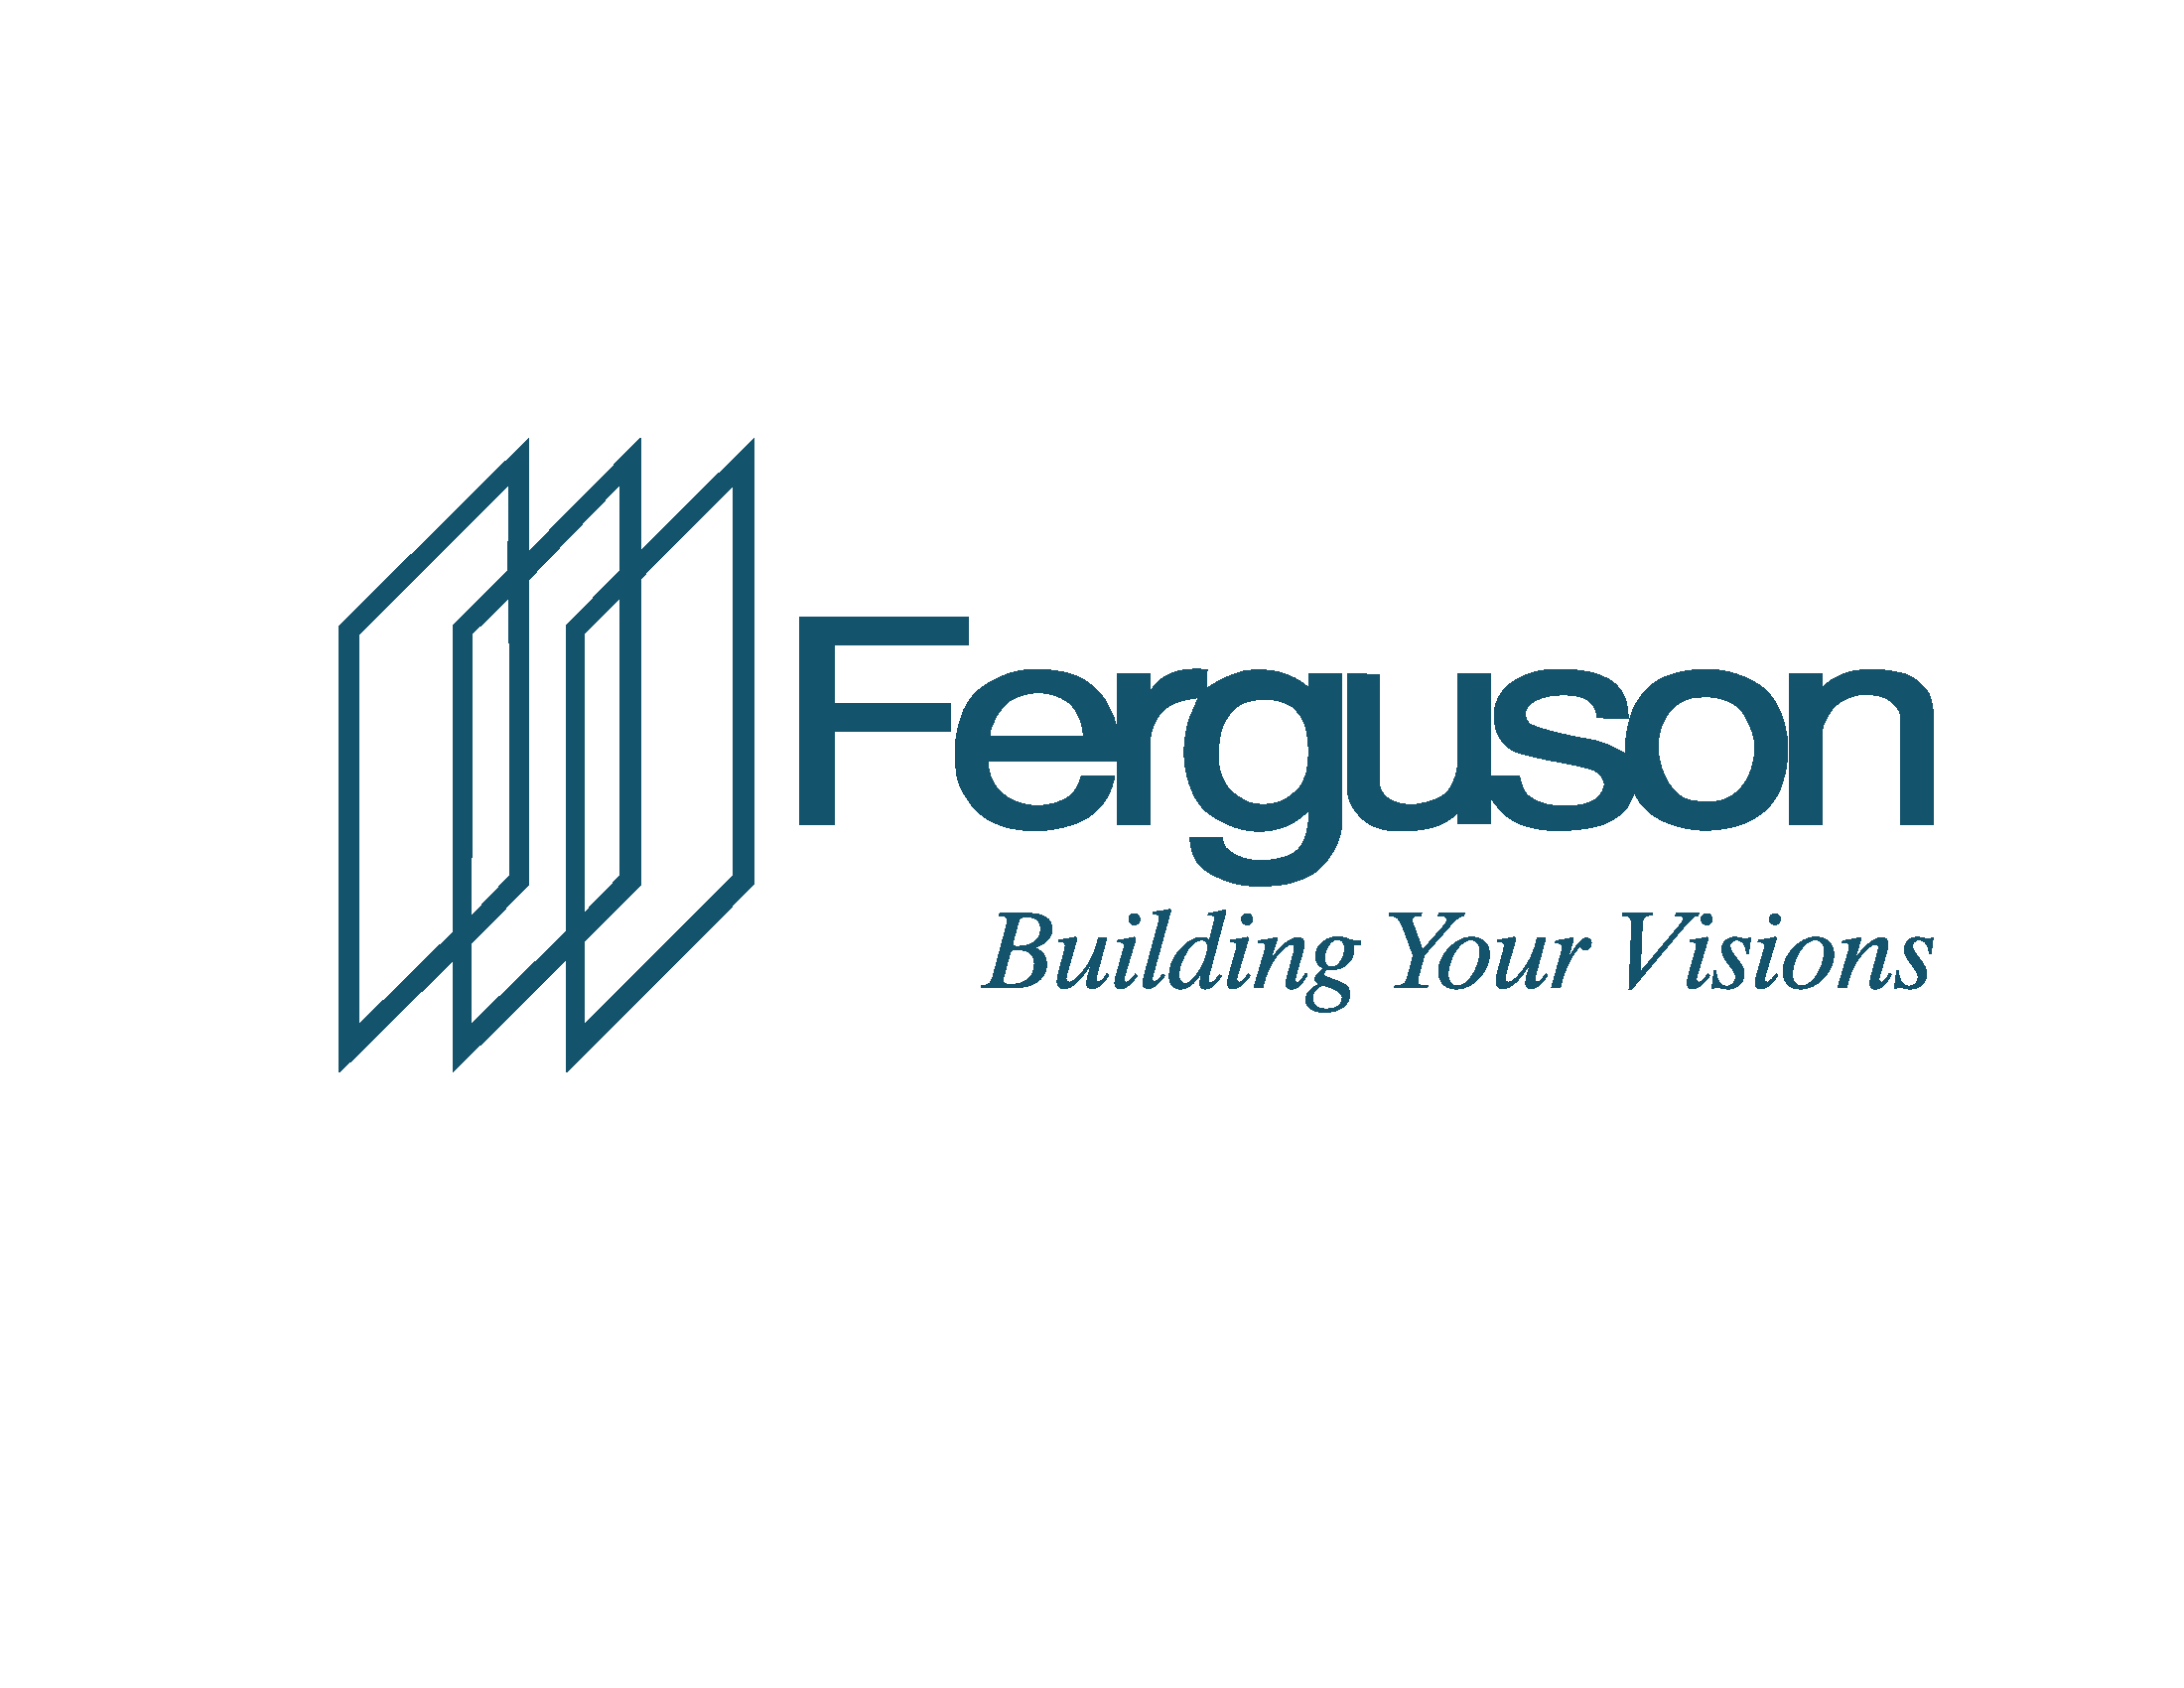 Ferguson Corporation